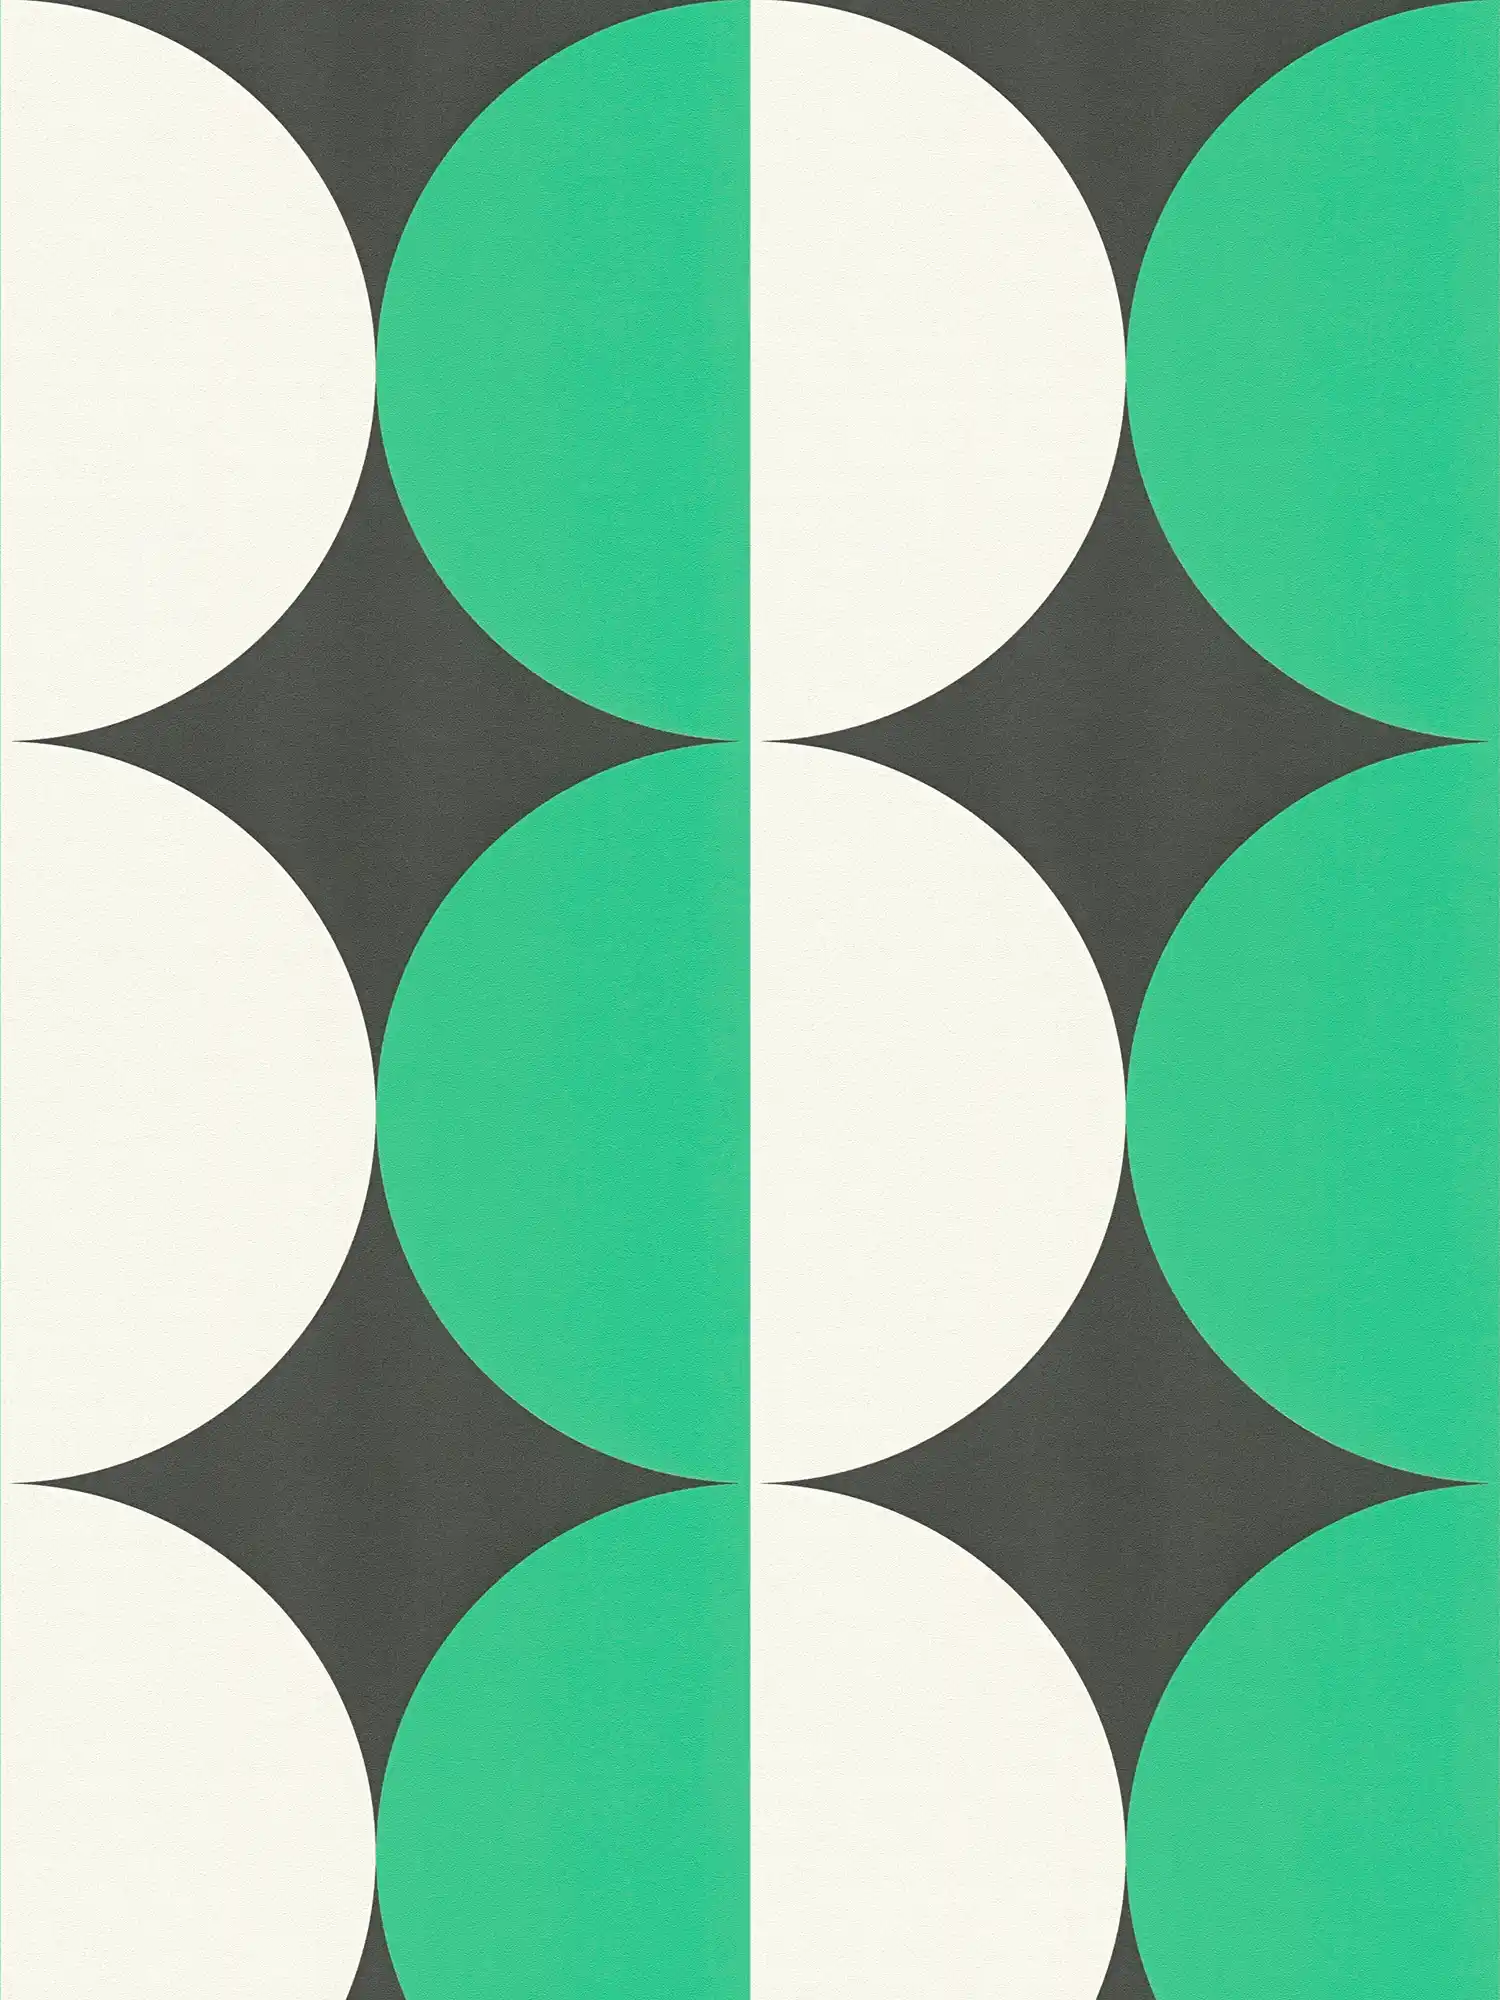         Retro 70s style circle pattern non-woven wallpaper - green, white, black
    